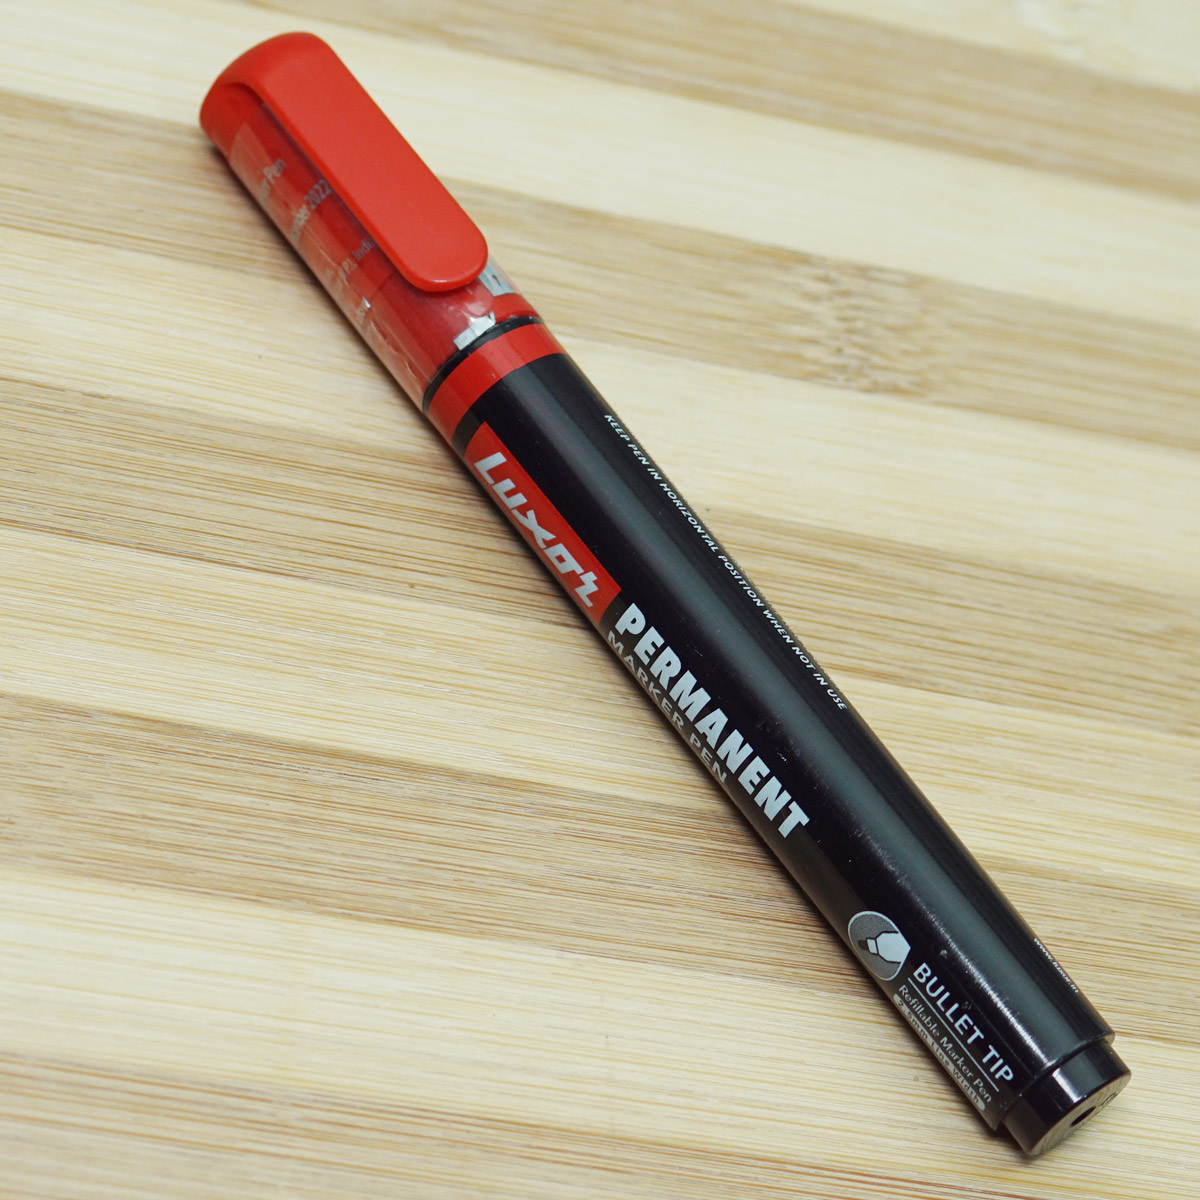 Luxor Black Color Body With Red Cap Red Ink Bullet Tip Permanent Marker SKU 22703